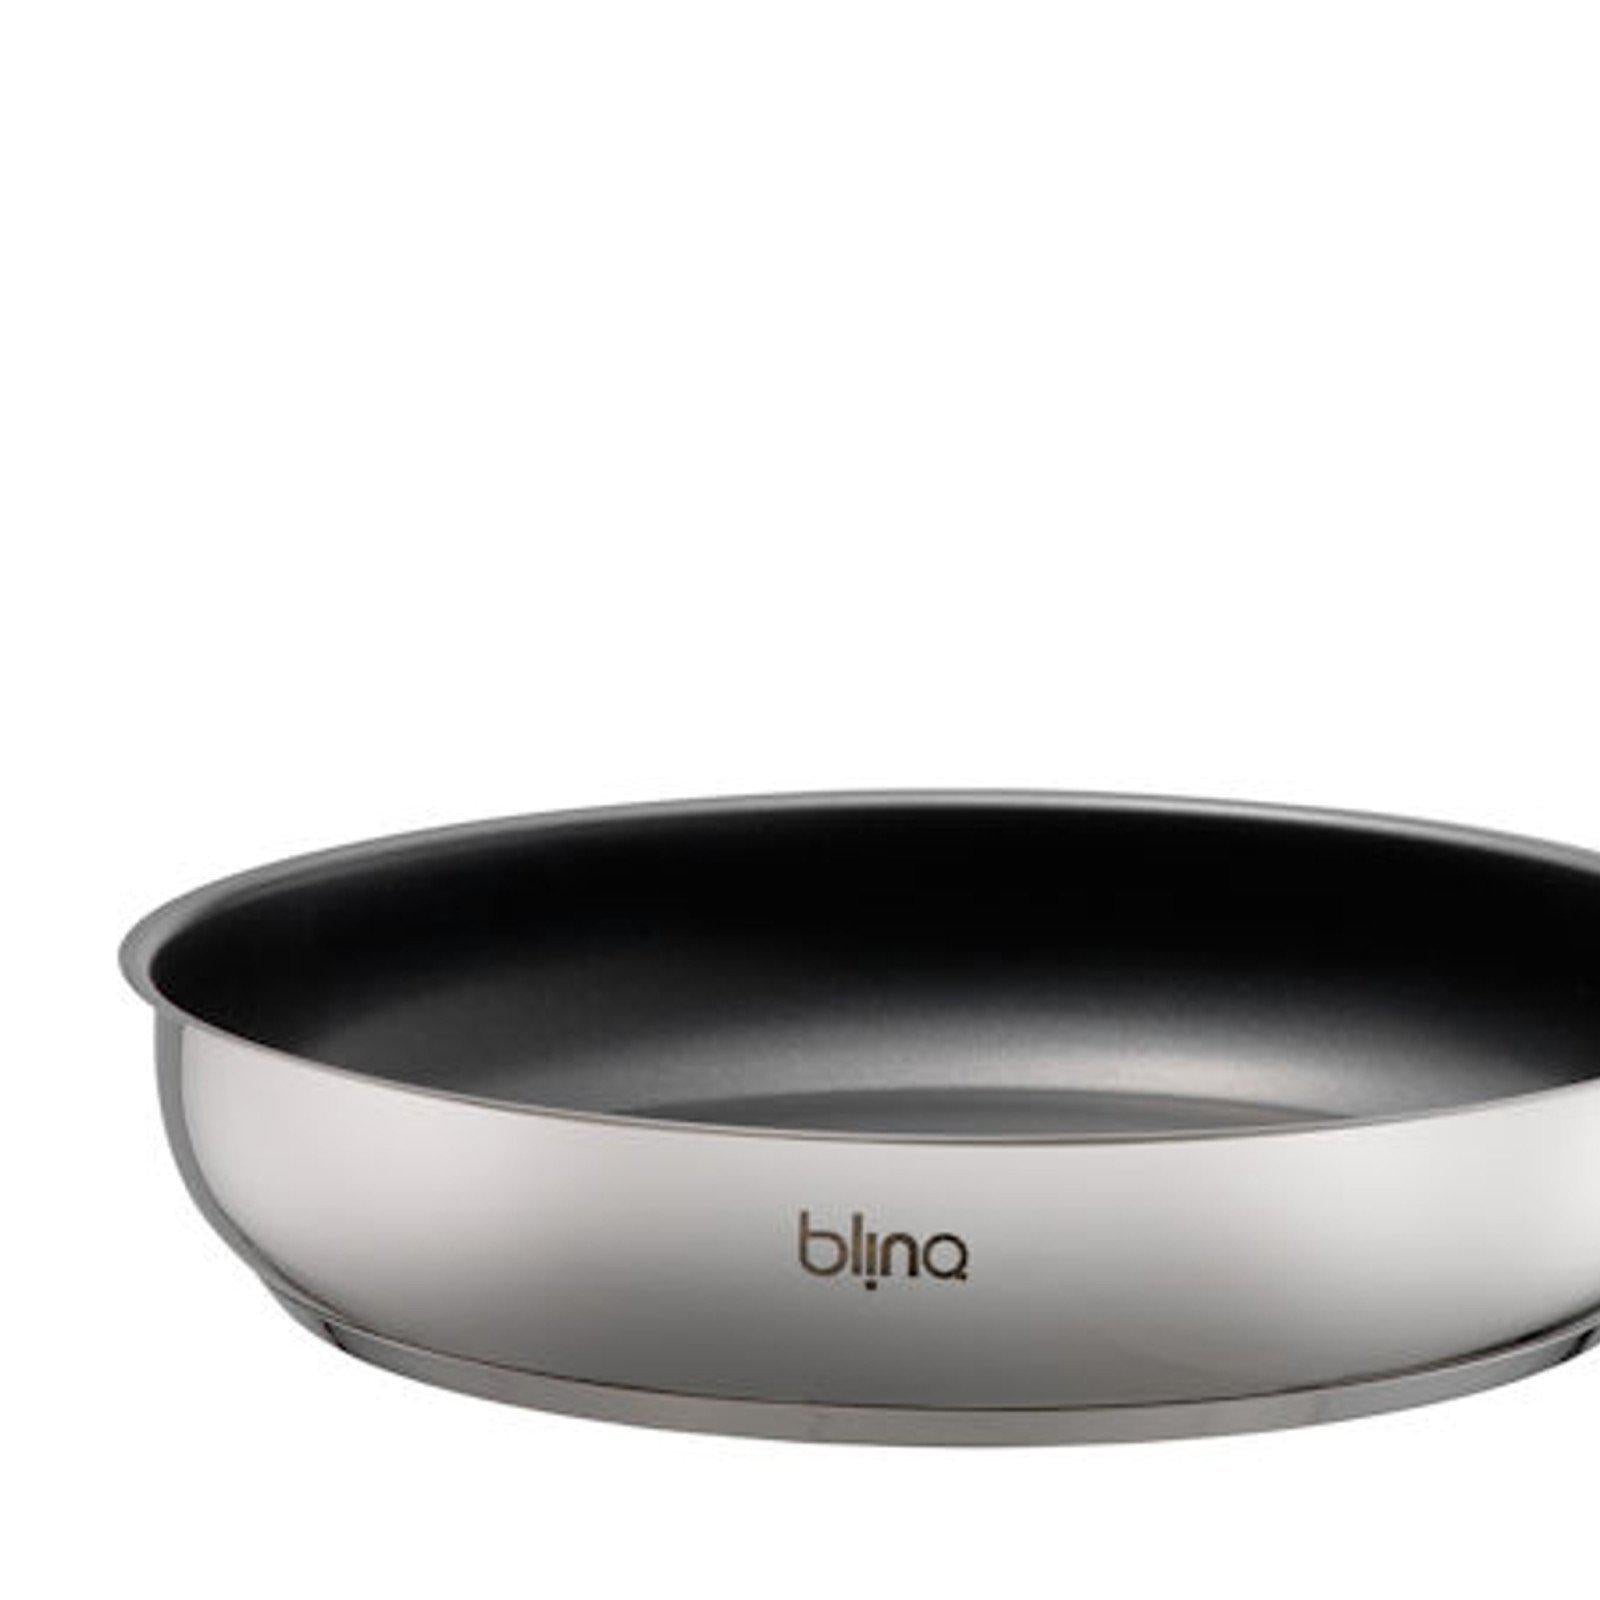 Blinq Gourmet Frying Pan 24cm Nonstick Induction Fry pan-Frying Pan-Chef's Quality Cookware